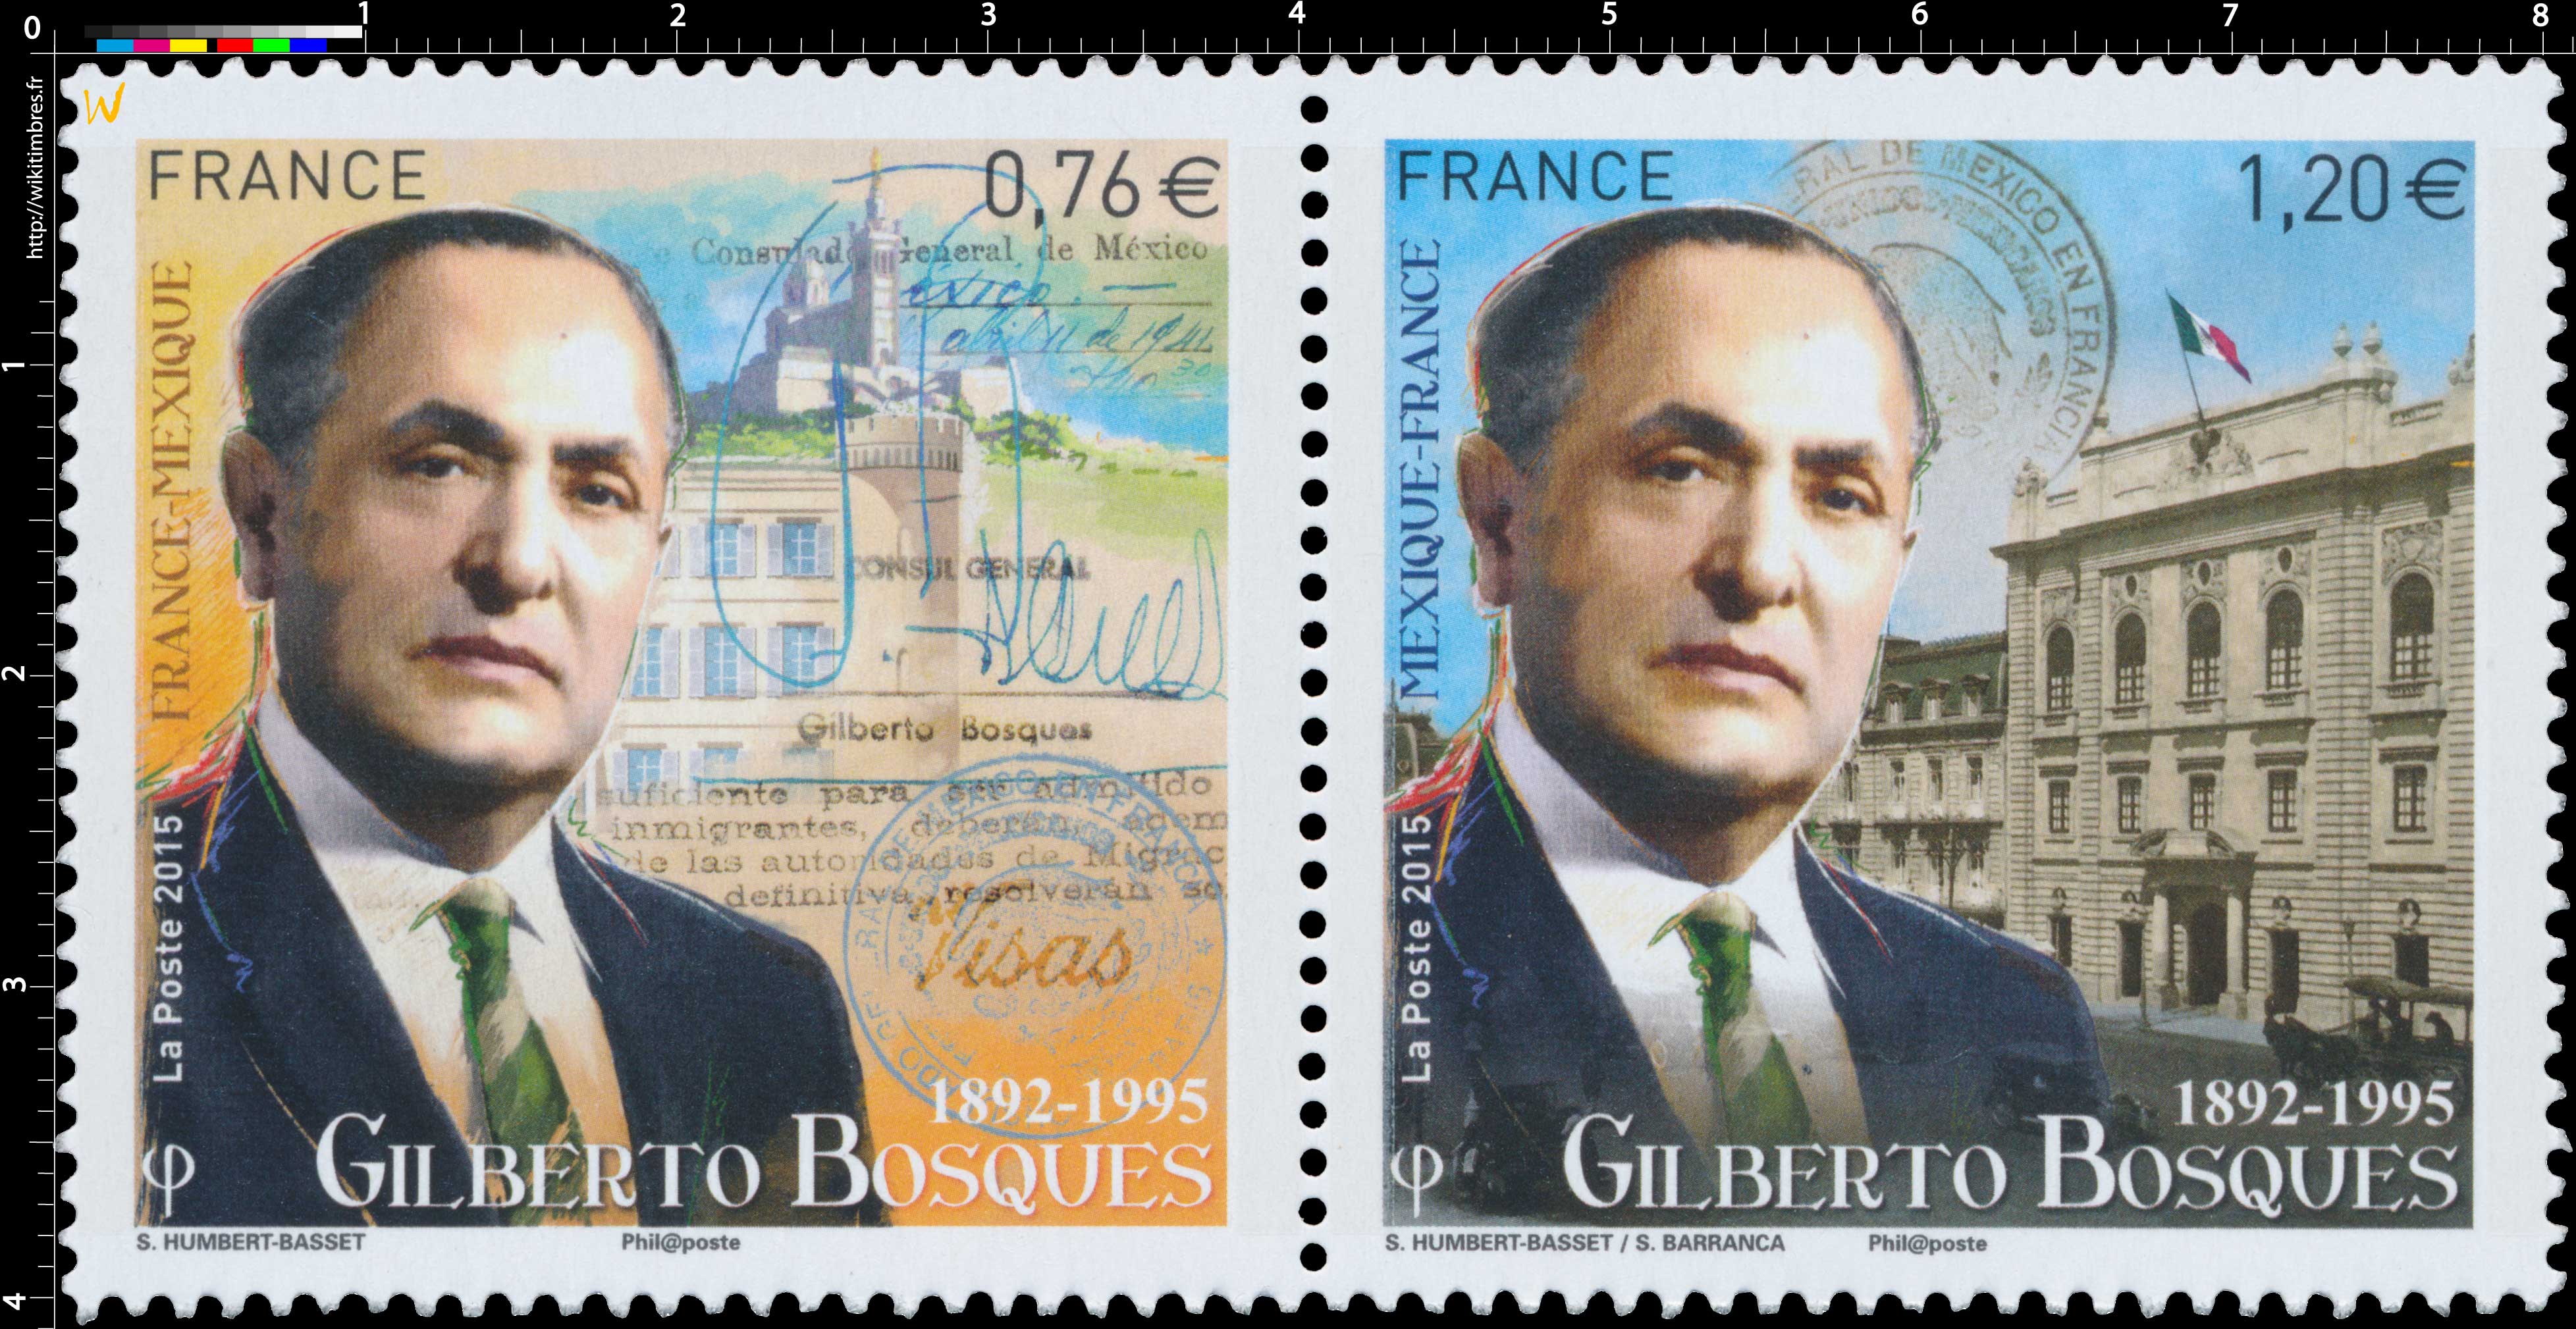 2015 France - Mexique Gilberto Bosques 1892-1995